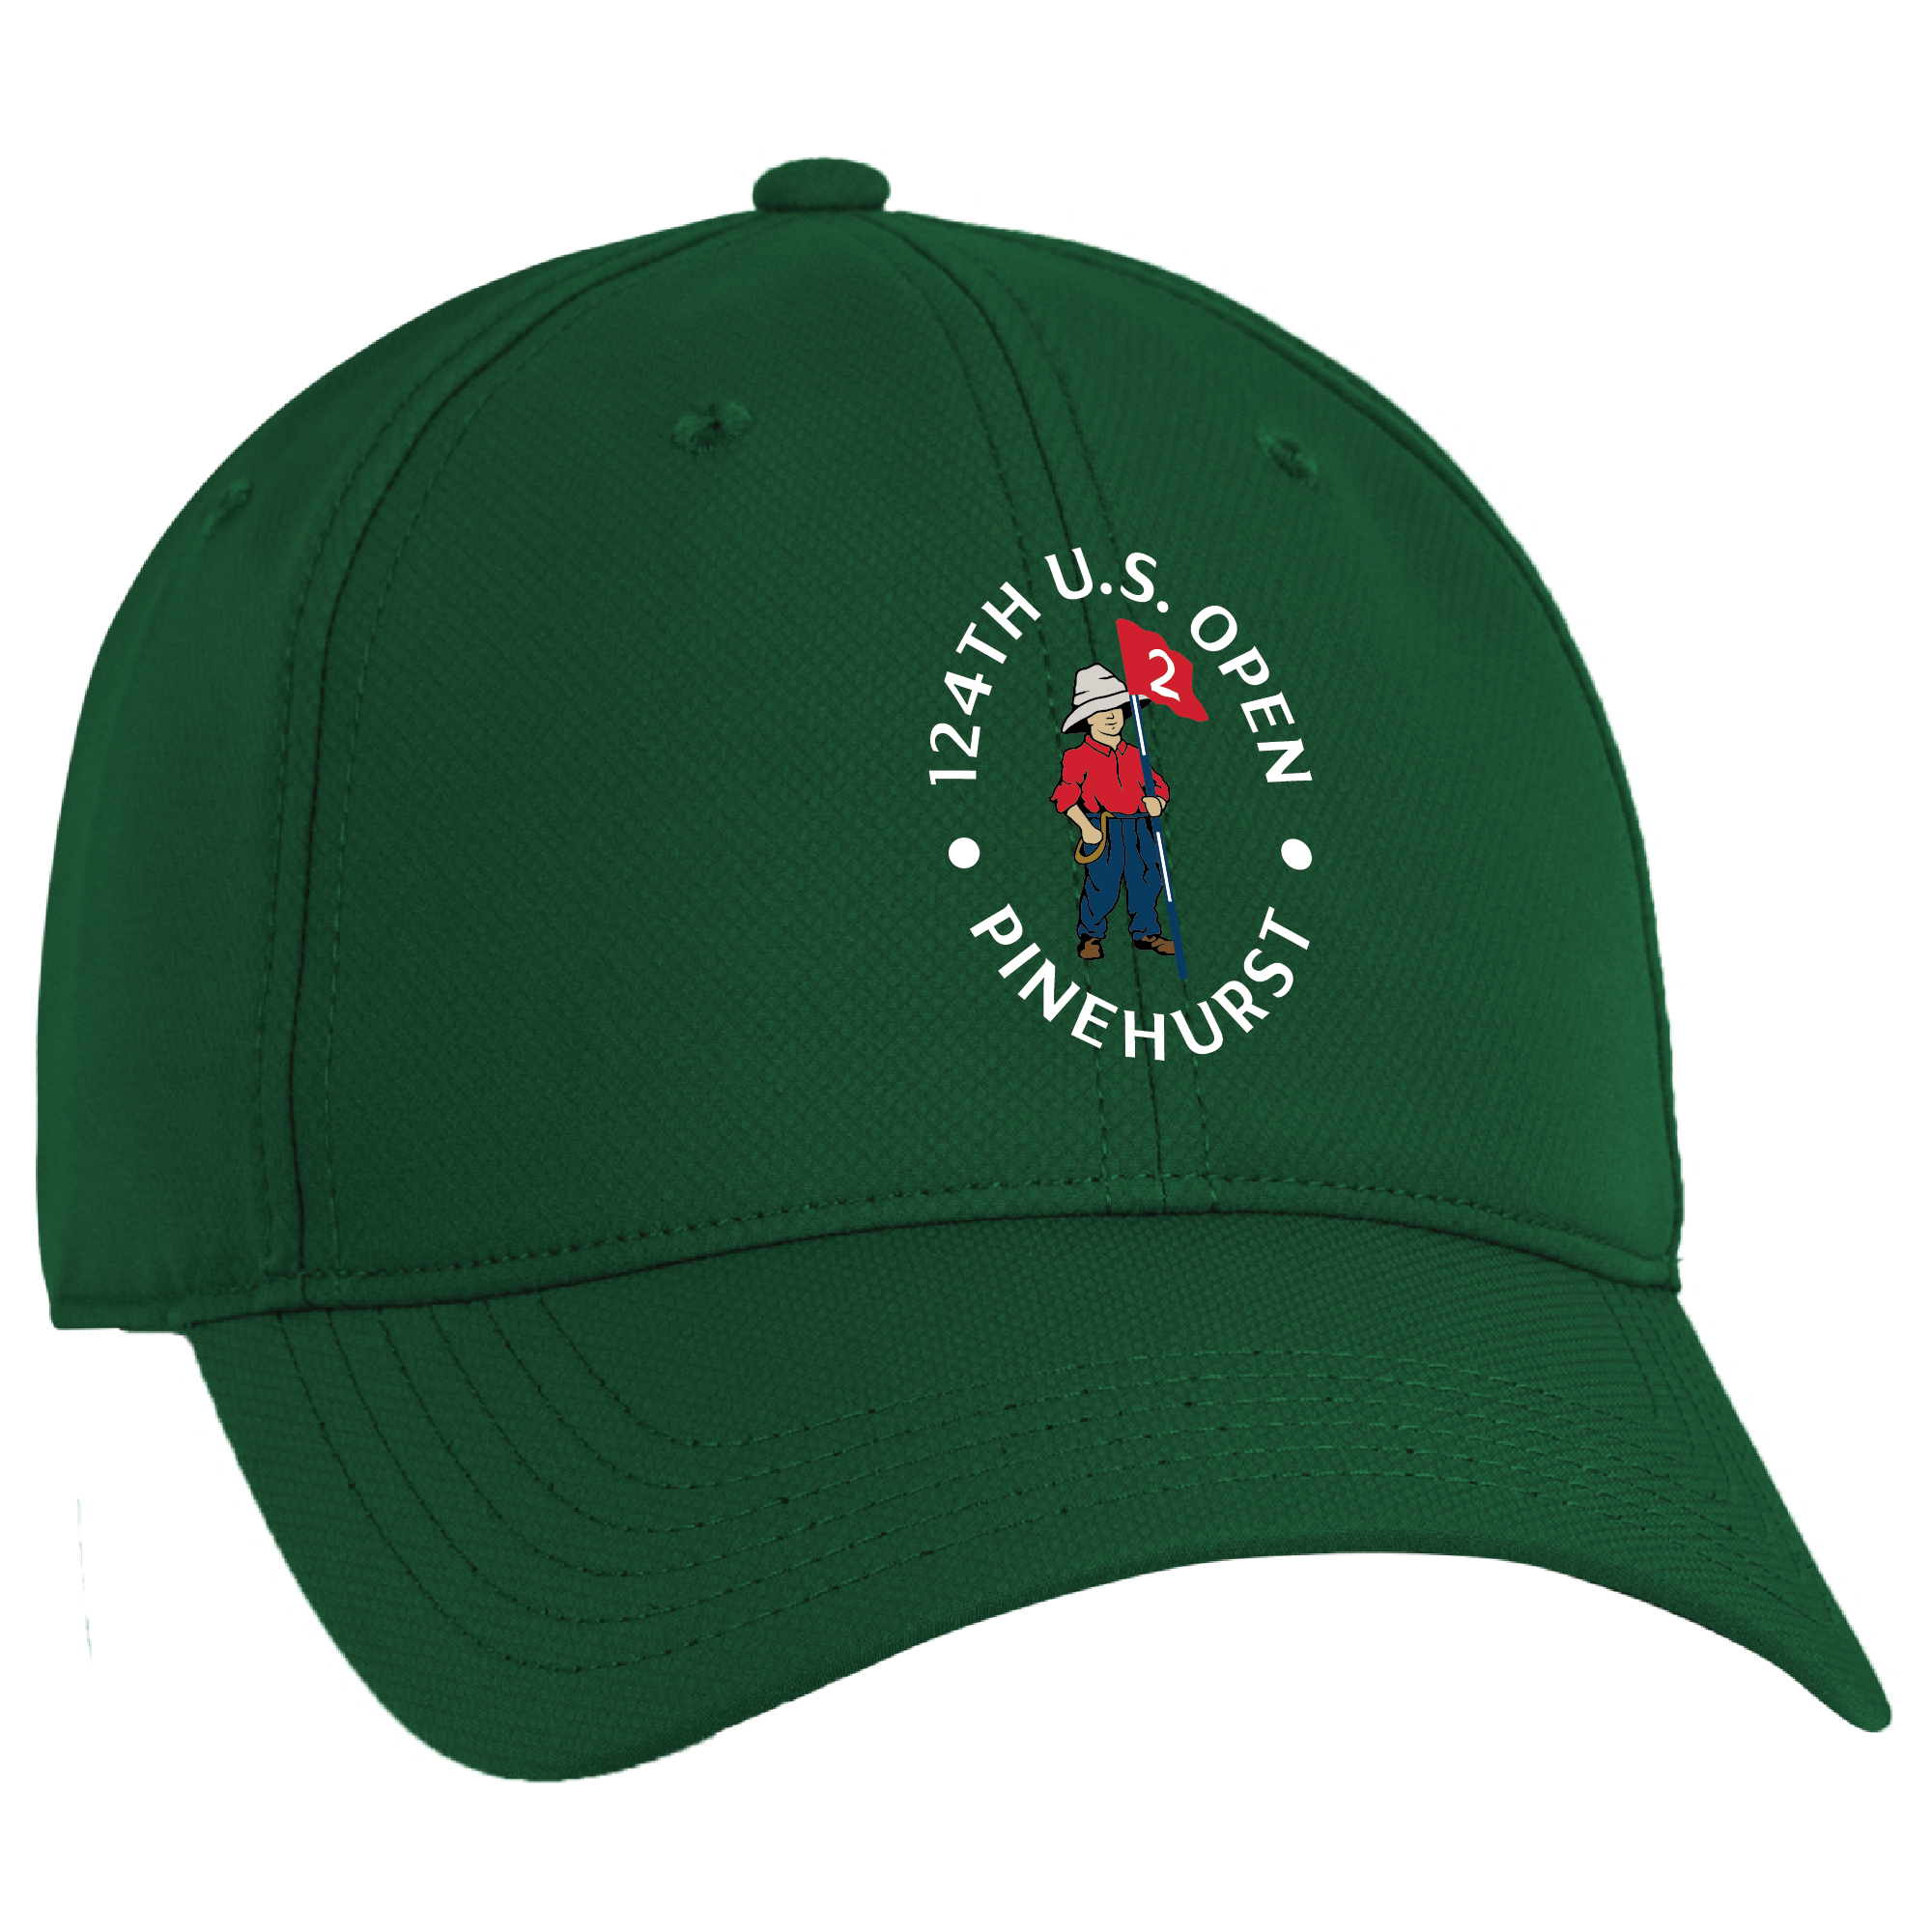 U.S. Open Performance Tech Cap (8 Colors) – USGA Corporate Merchandise